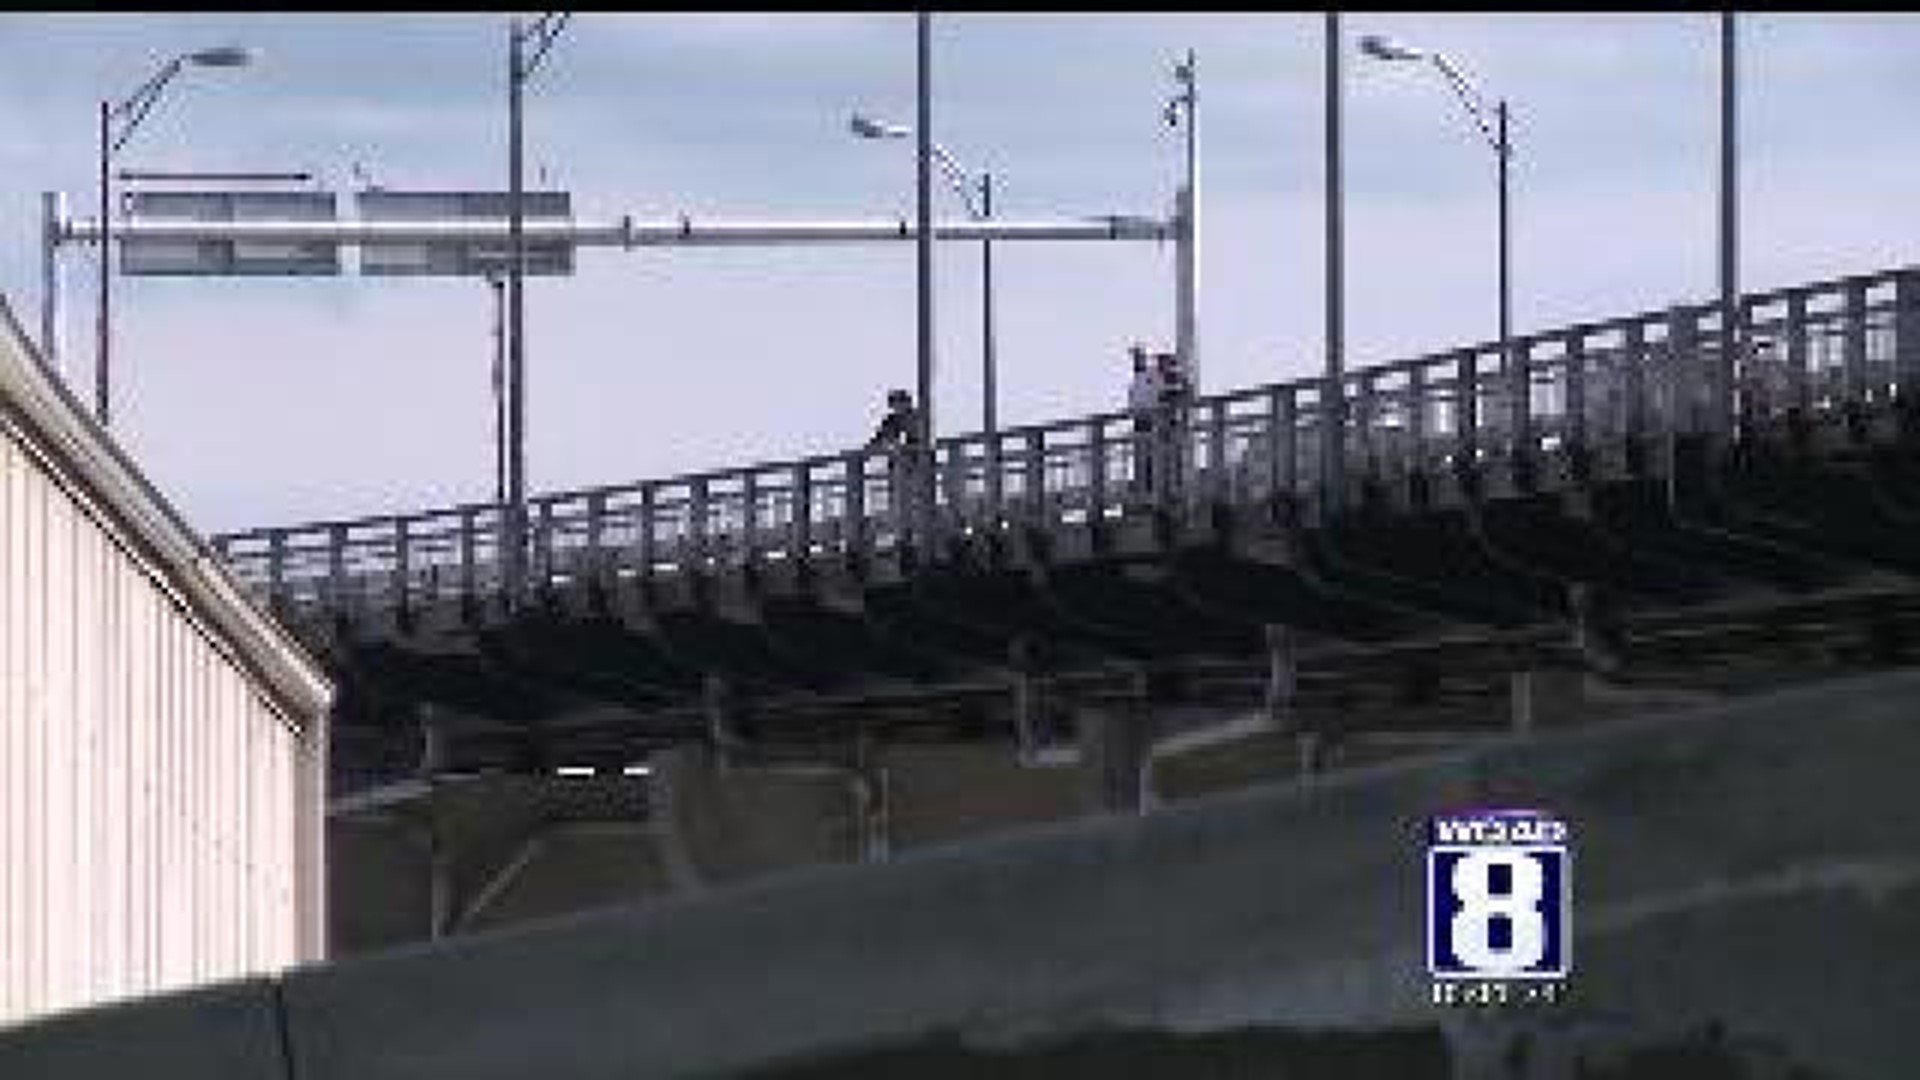 Centennial Bridge reopened